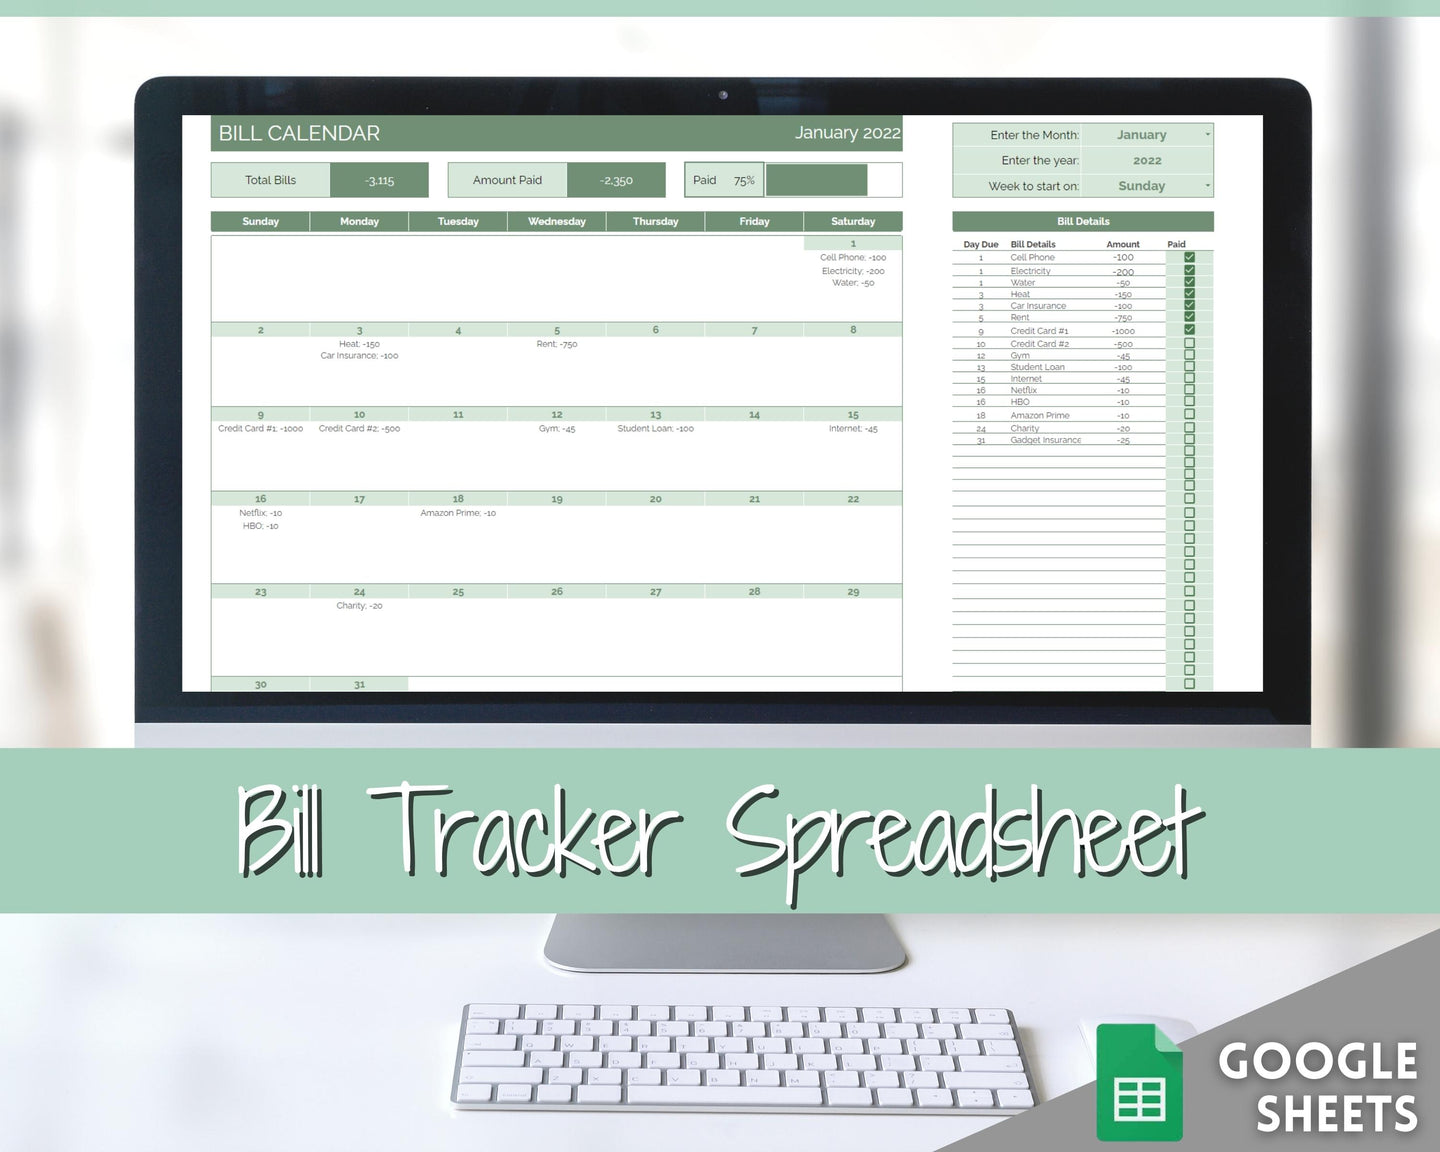 Monthly Bill Payment Tracker Spreadsheet | Google Sheets Automated Bill Calendar & Organizer | Green